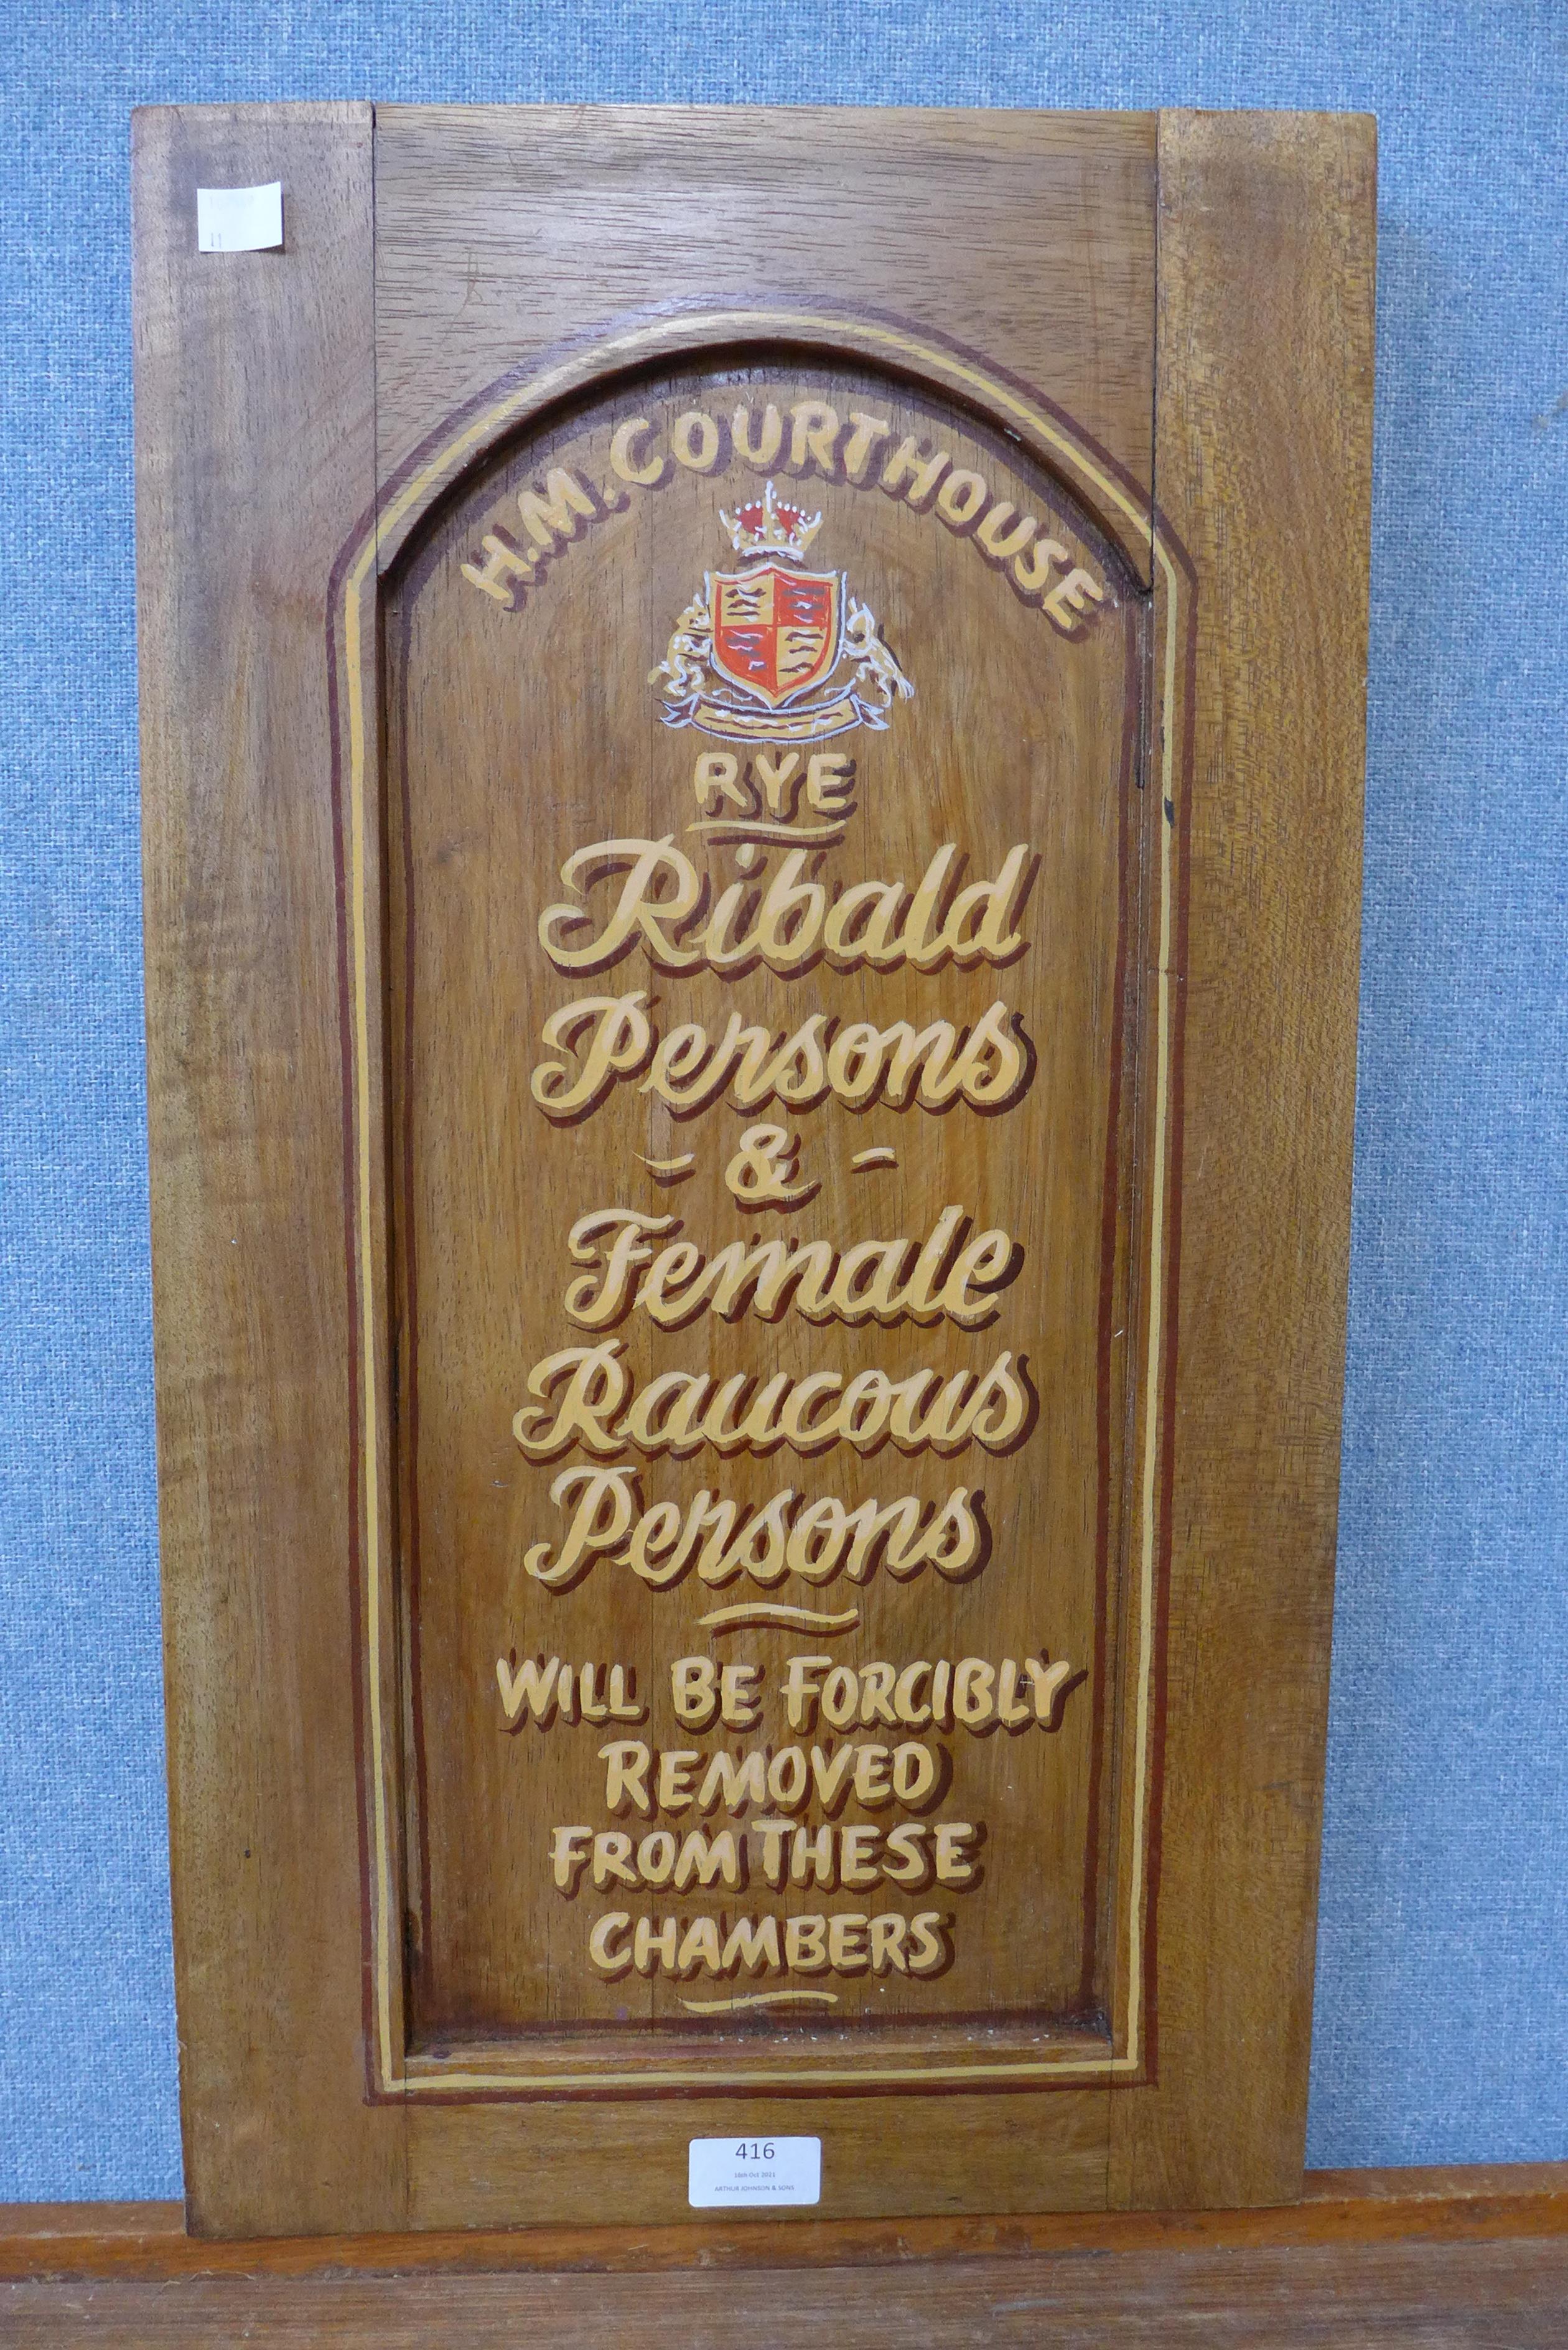 A mahogany panel, bearing Rye, H.M. Courthouse